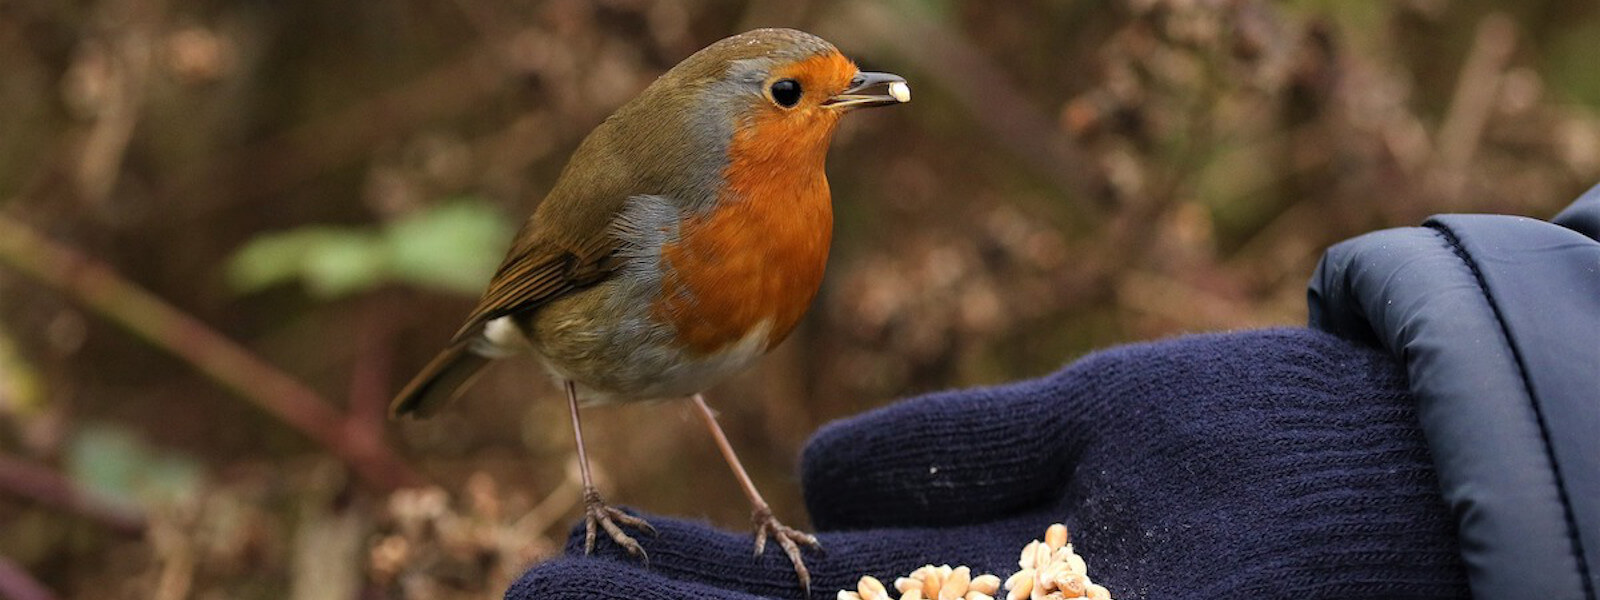 Little robin bird feeding seeds on a gloved hand.